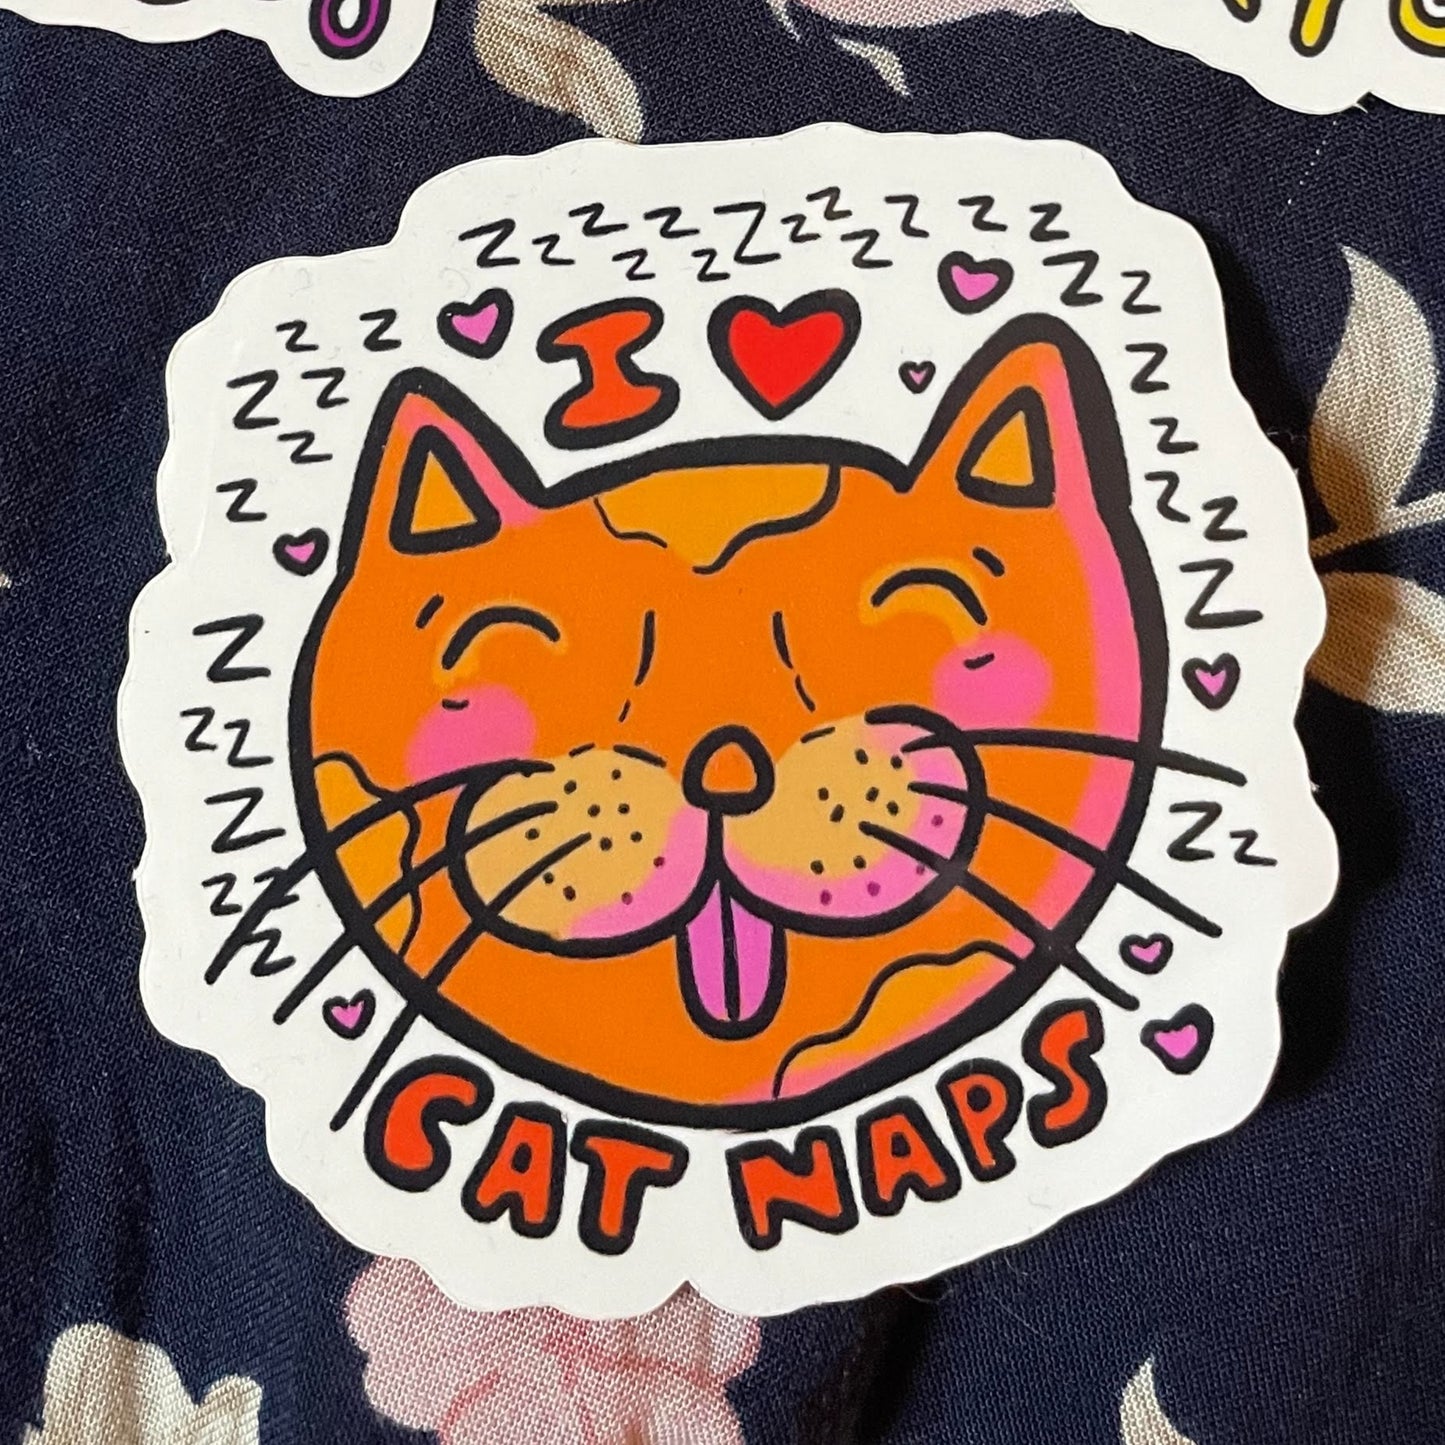 I Heart Cat Naps STICKER by Caroline